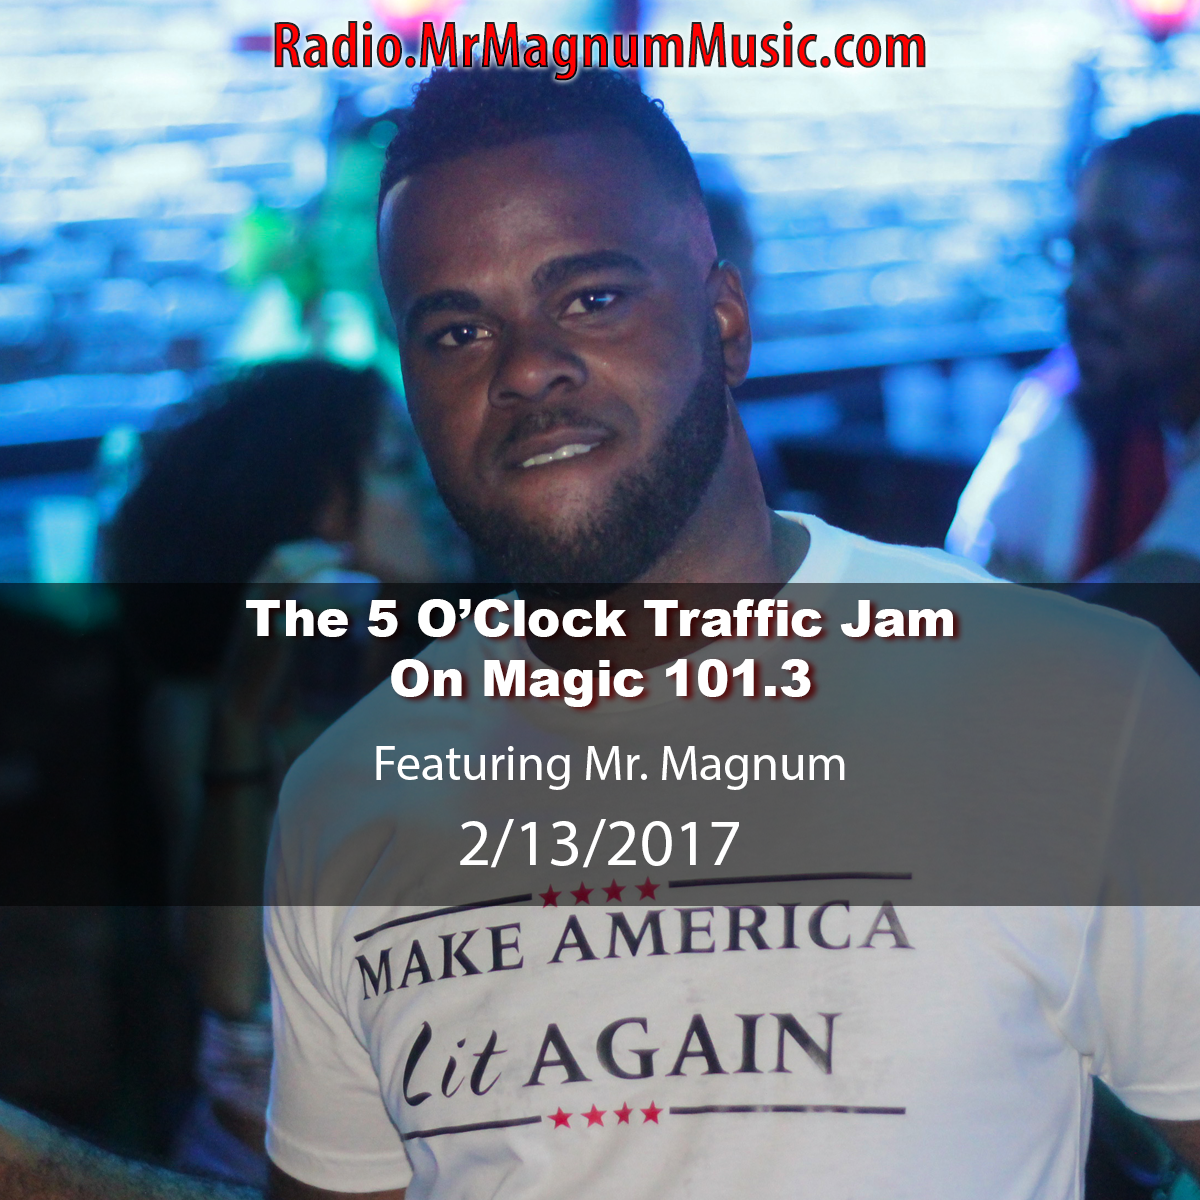 The 5 O’Clock Traffic Jam 2-13-2017 on Magic 101.3